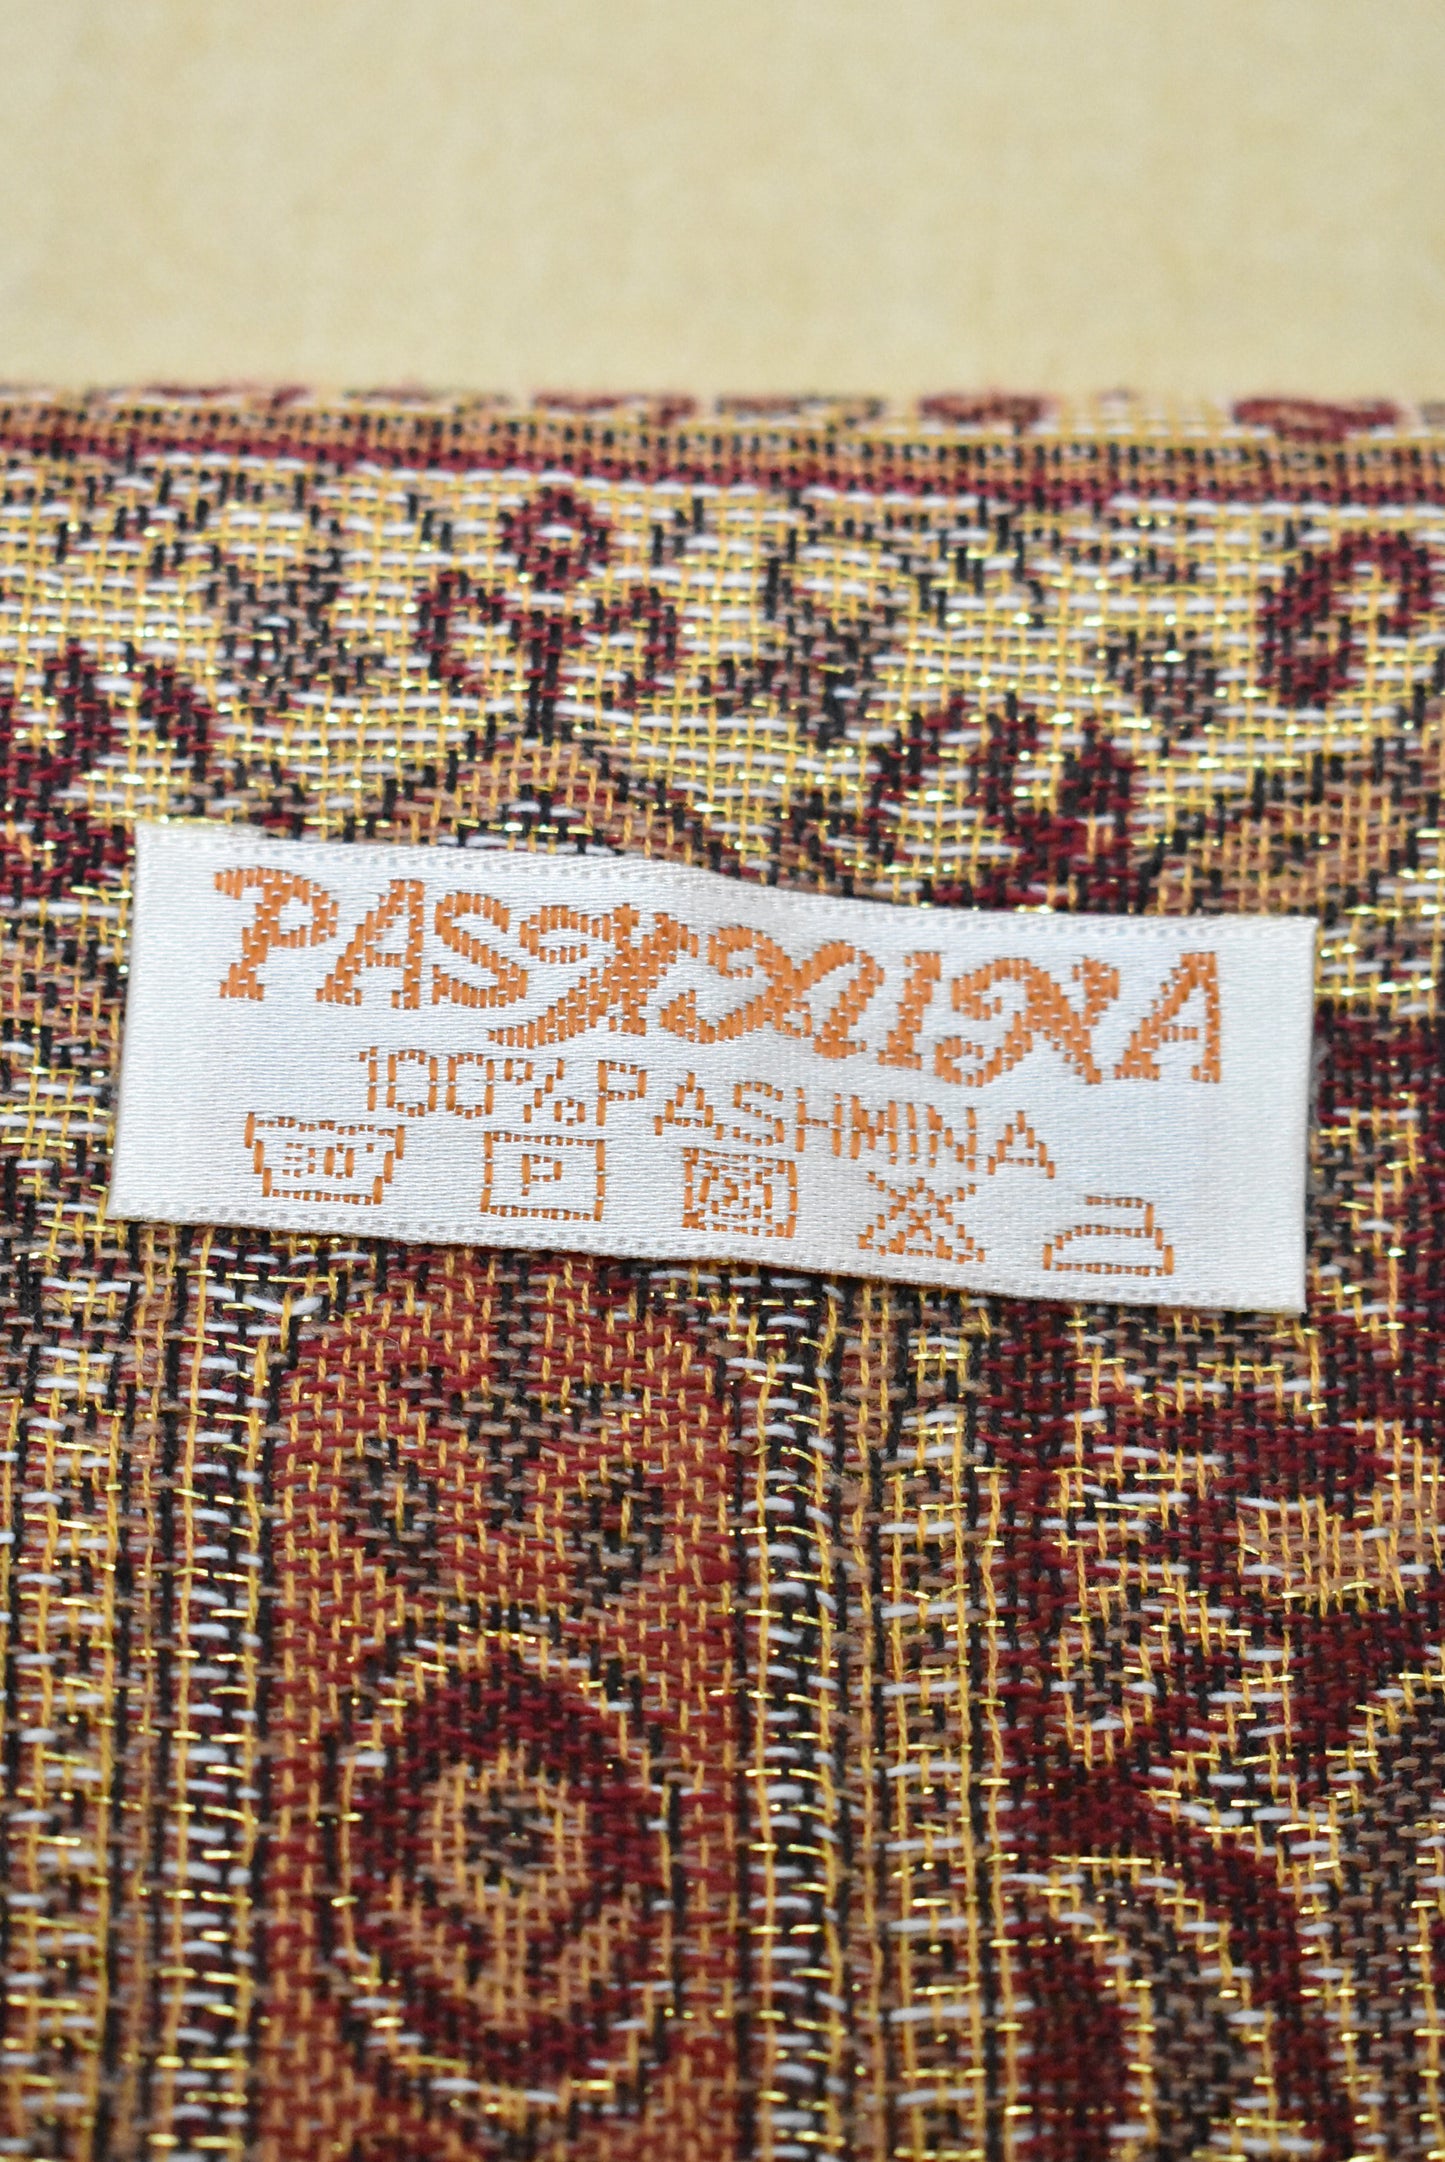 100% Pashmina fabric scarf